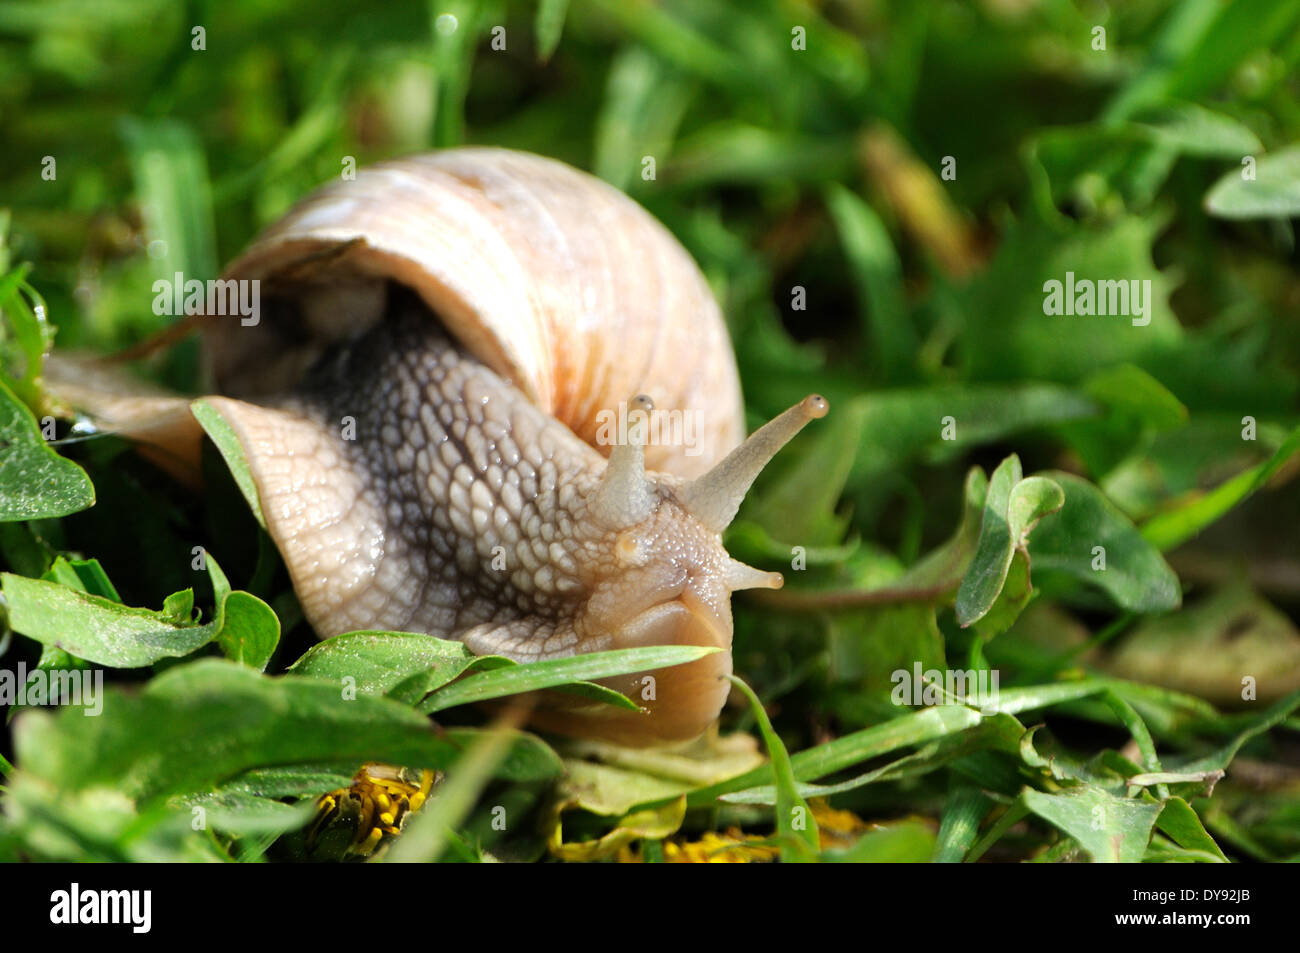 Edible snail, snails, snail, molluscs, Mollusca, edible snails, Helix pomatia, snail shells, animal, animals, Germany, Europe, Stock Photo